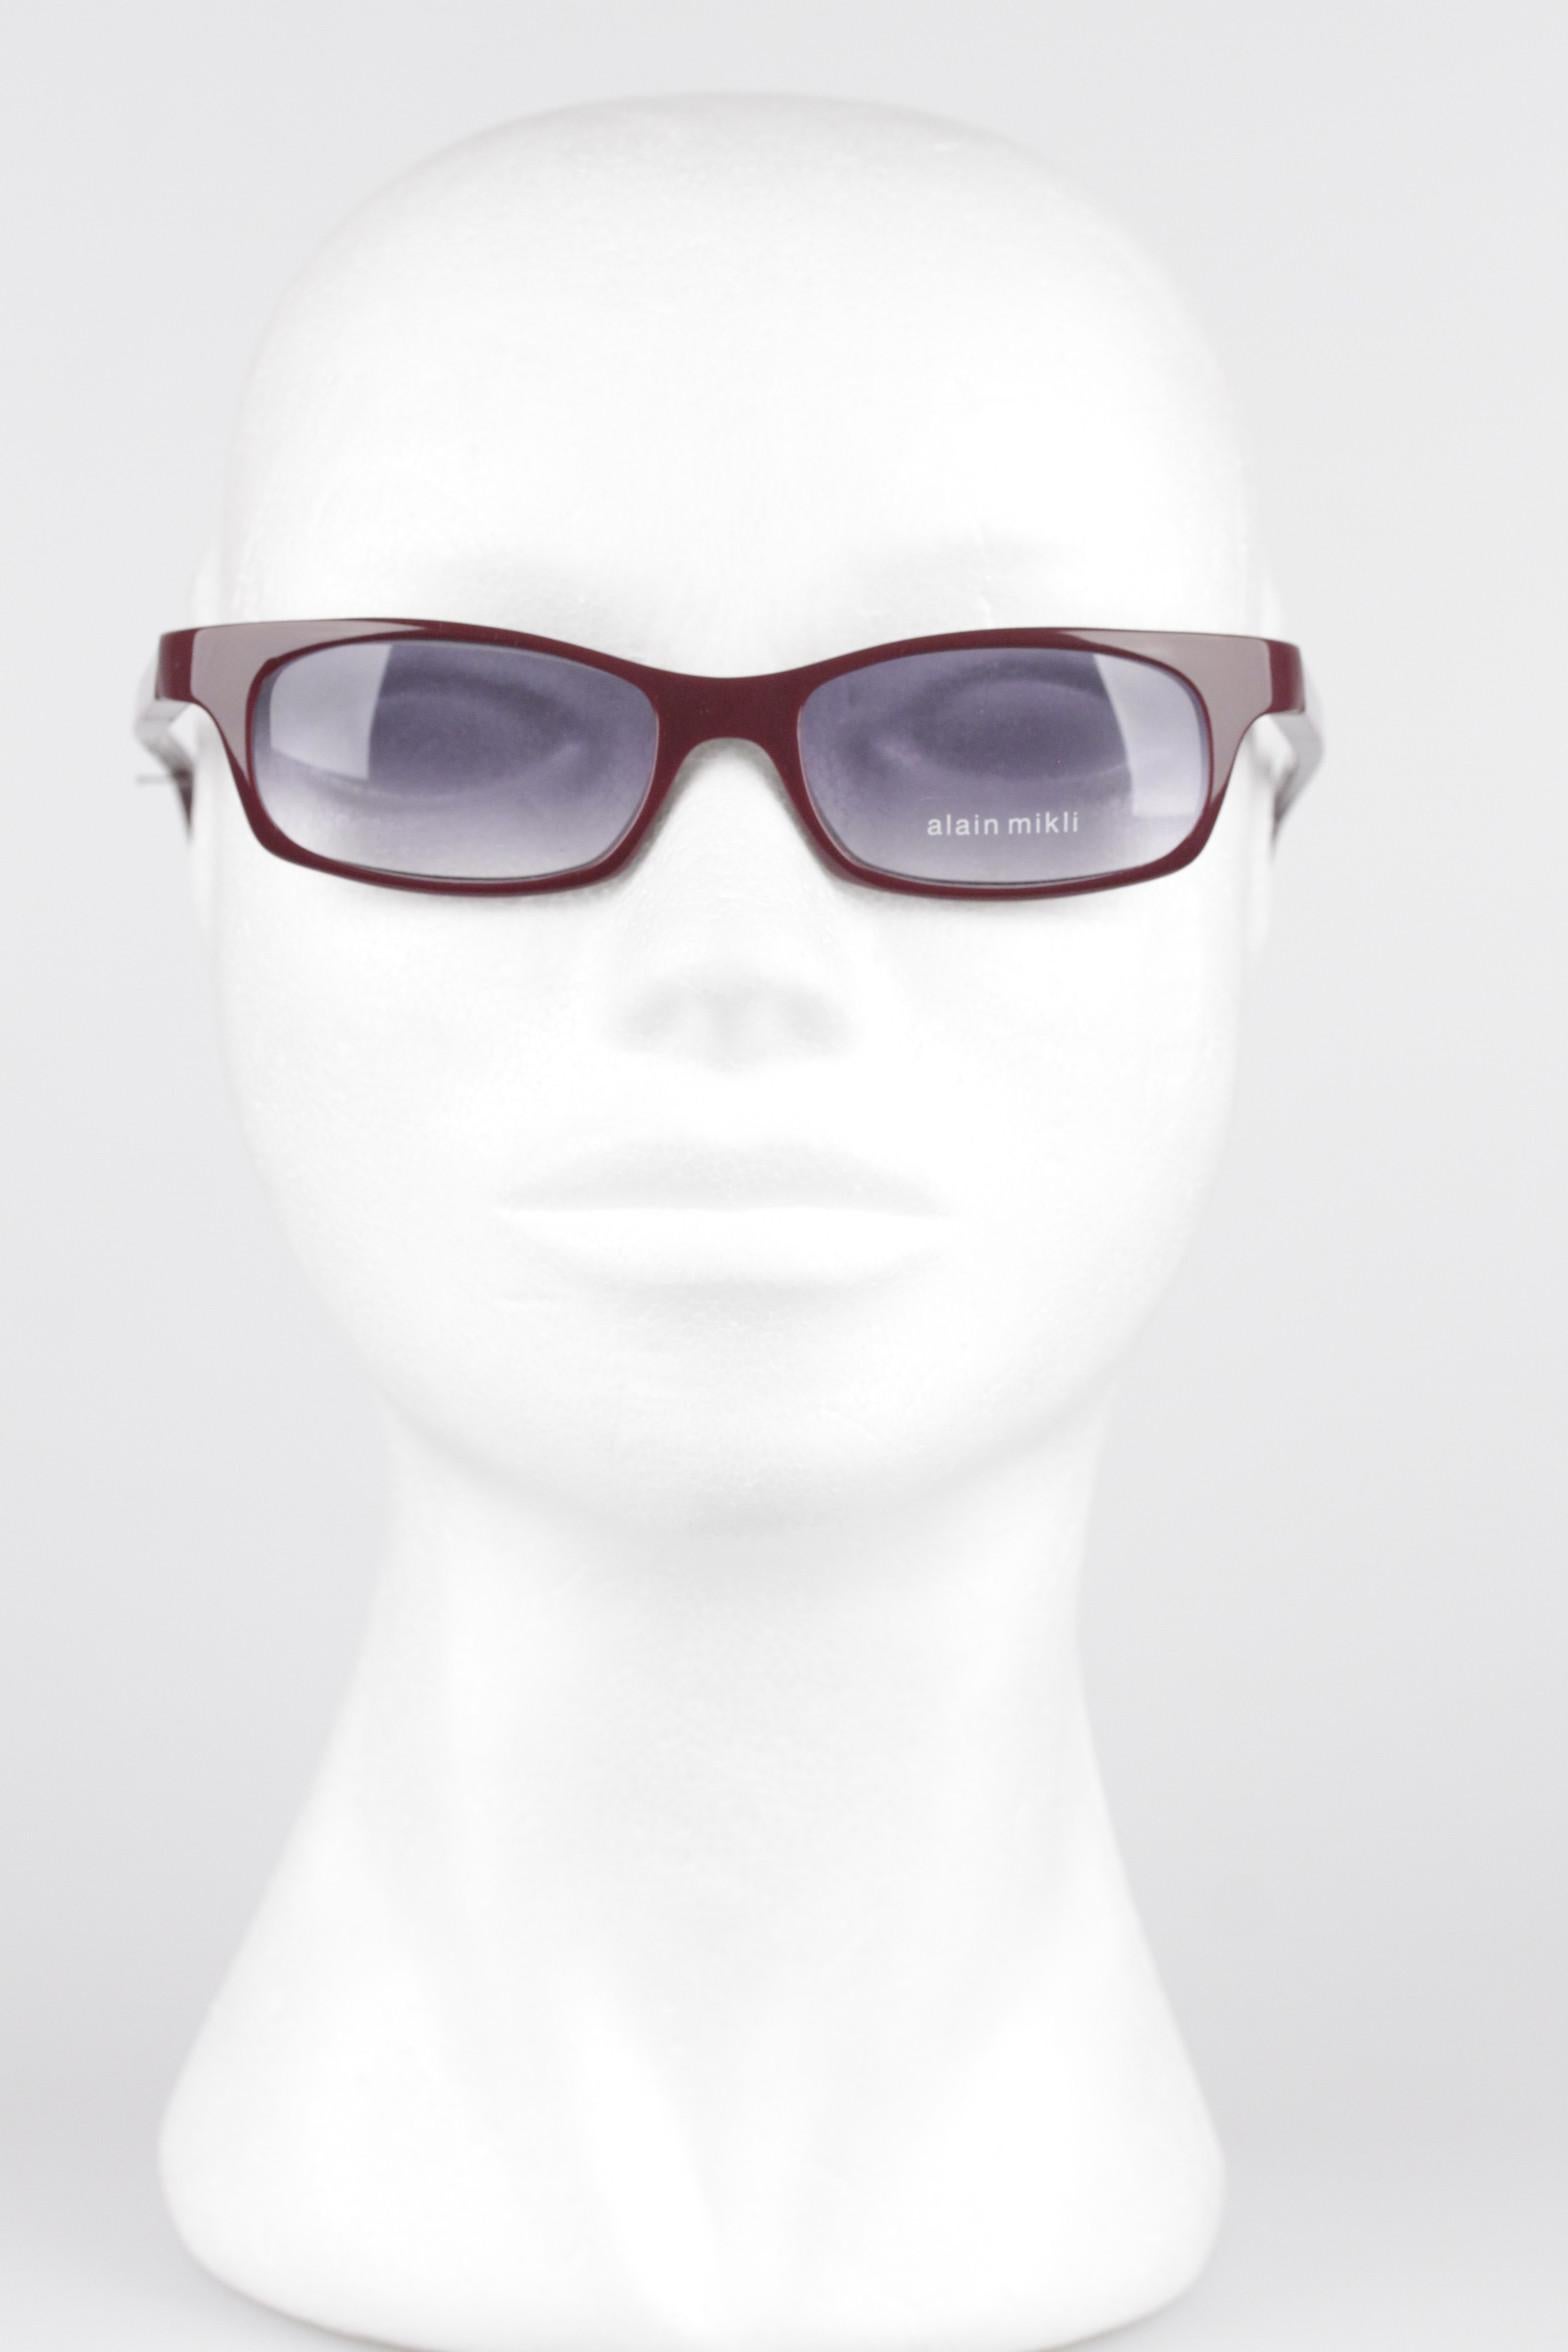 Alain Mikli Burgundy Mint Sunglasses A0701 52-16mm Gradient Zeiss Lens 7